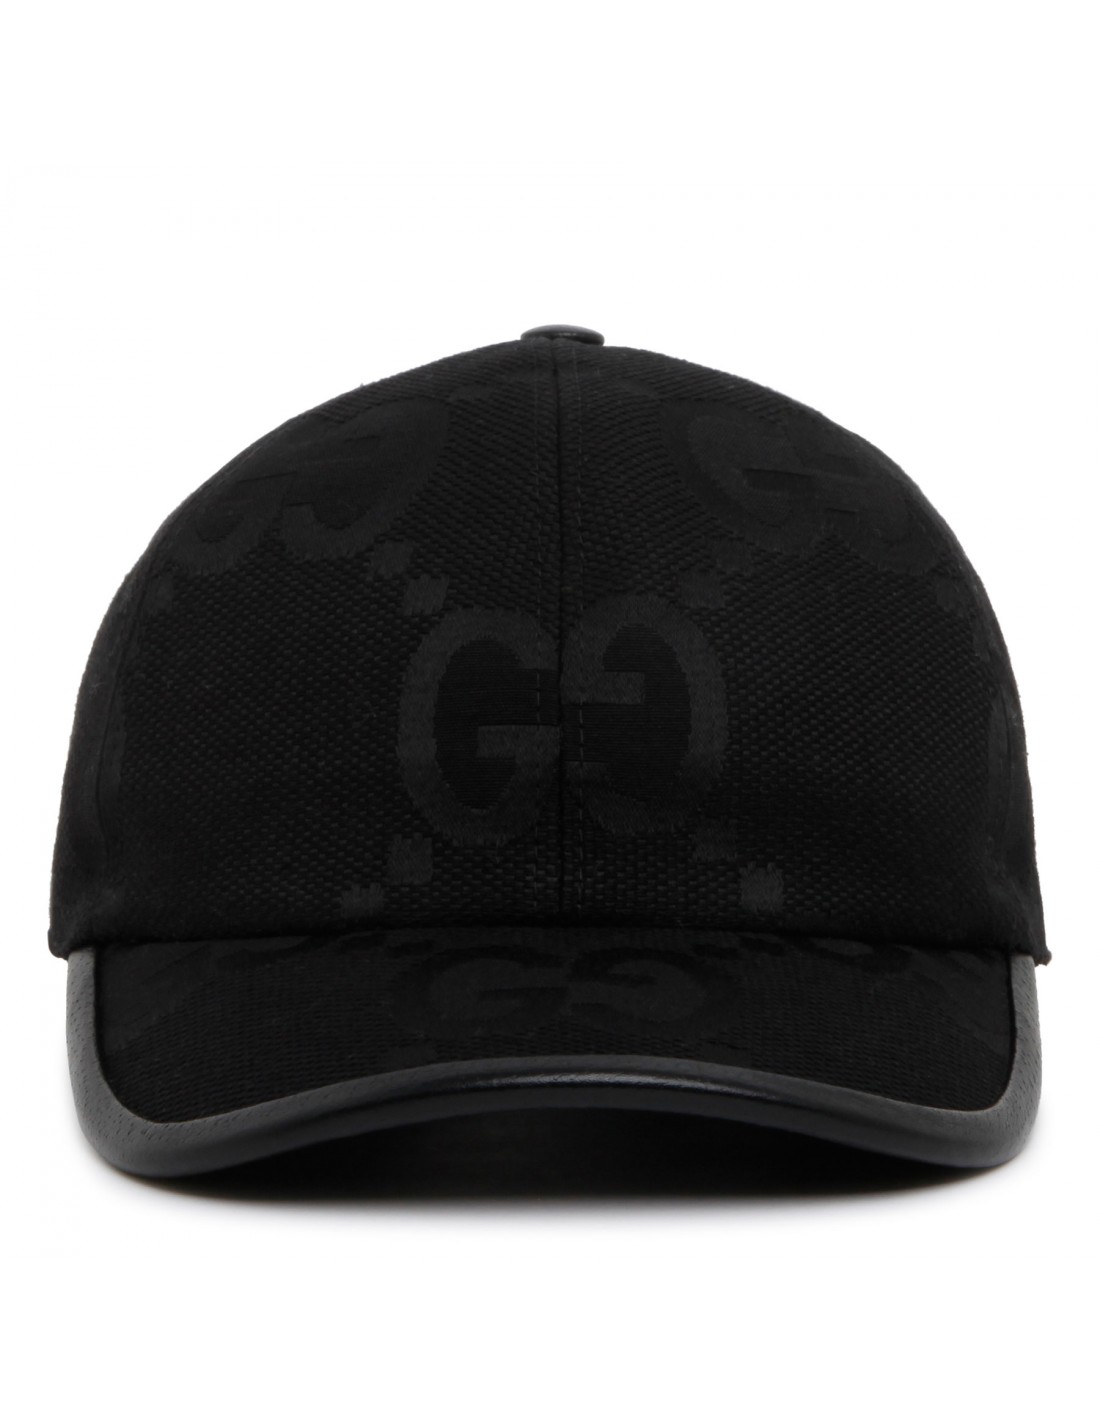 Jumbo GG baseball cap